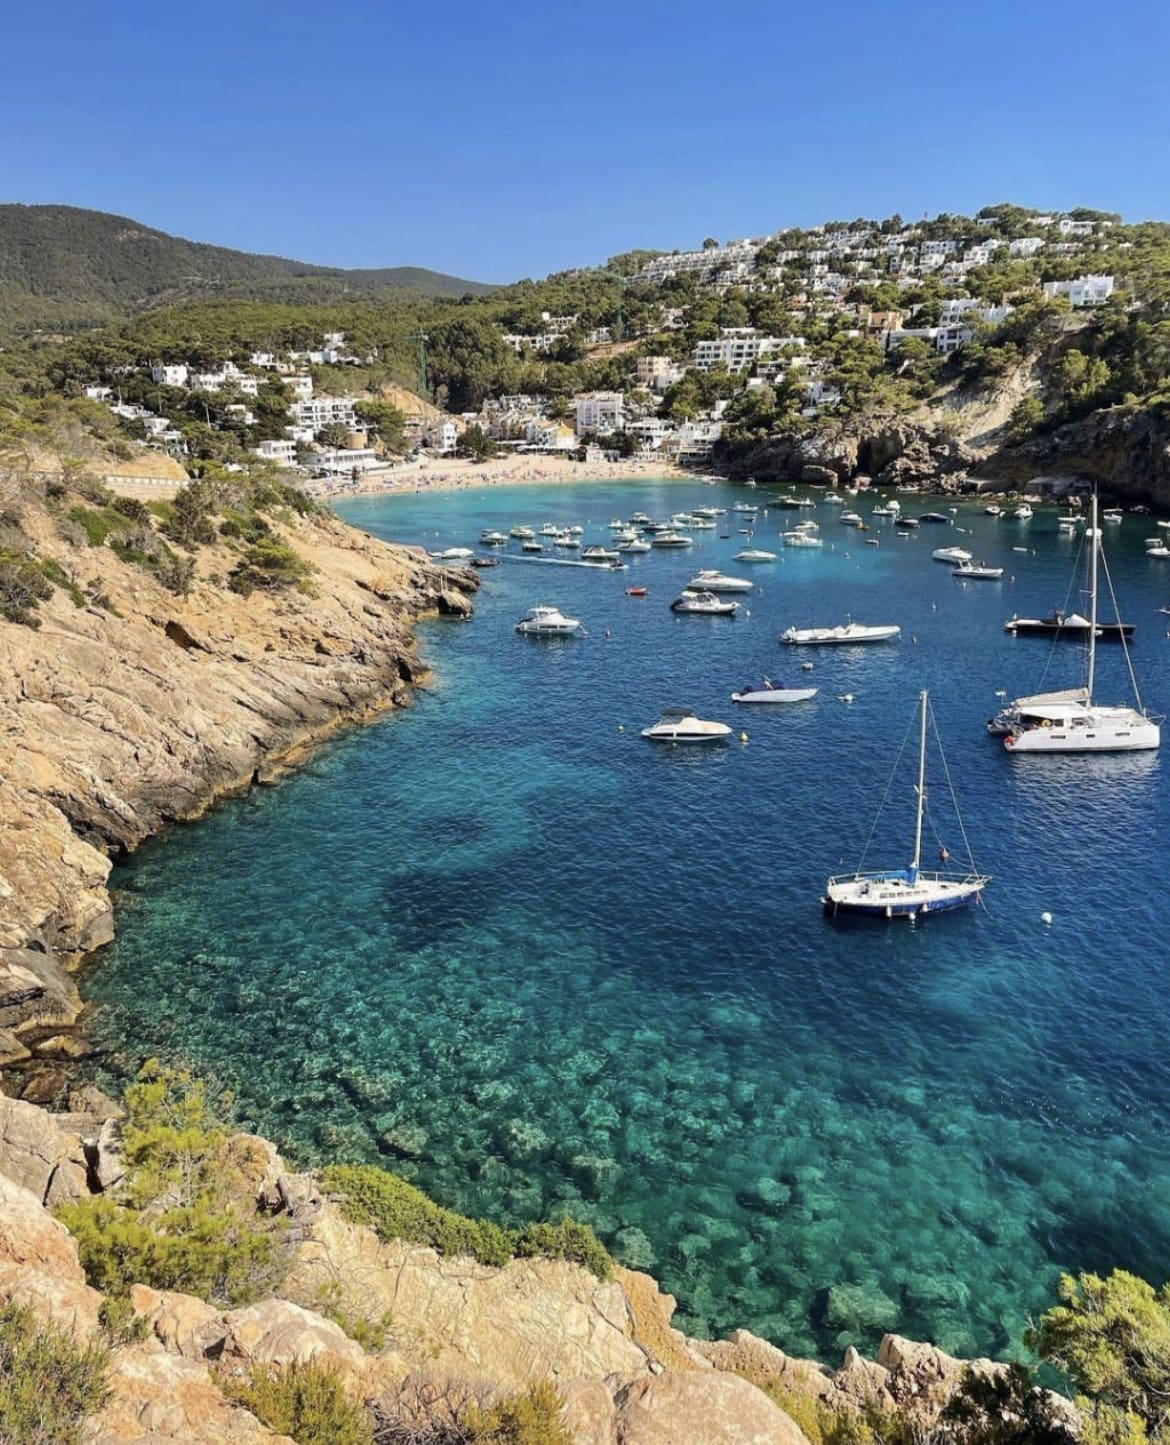 Picturesque blue waters in Cala Vadella, Ibiza